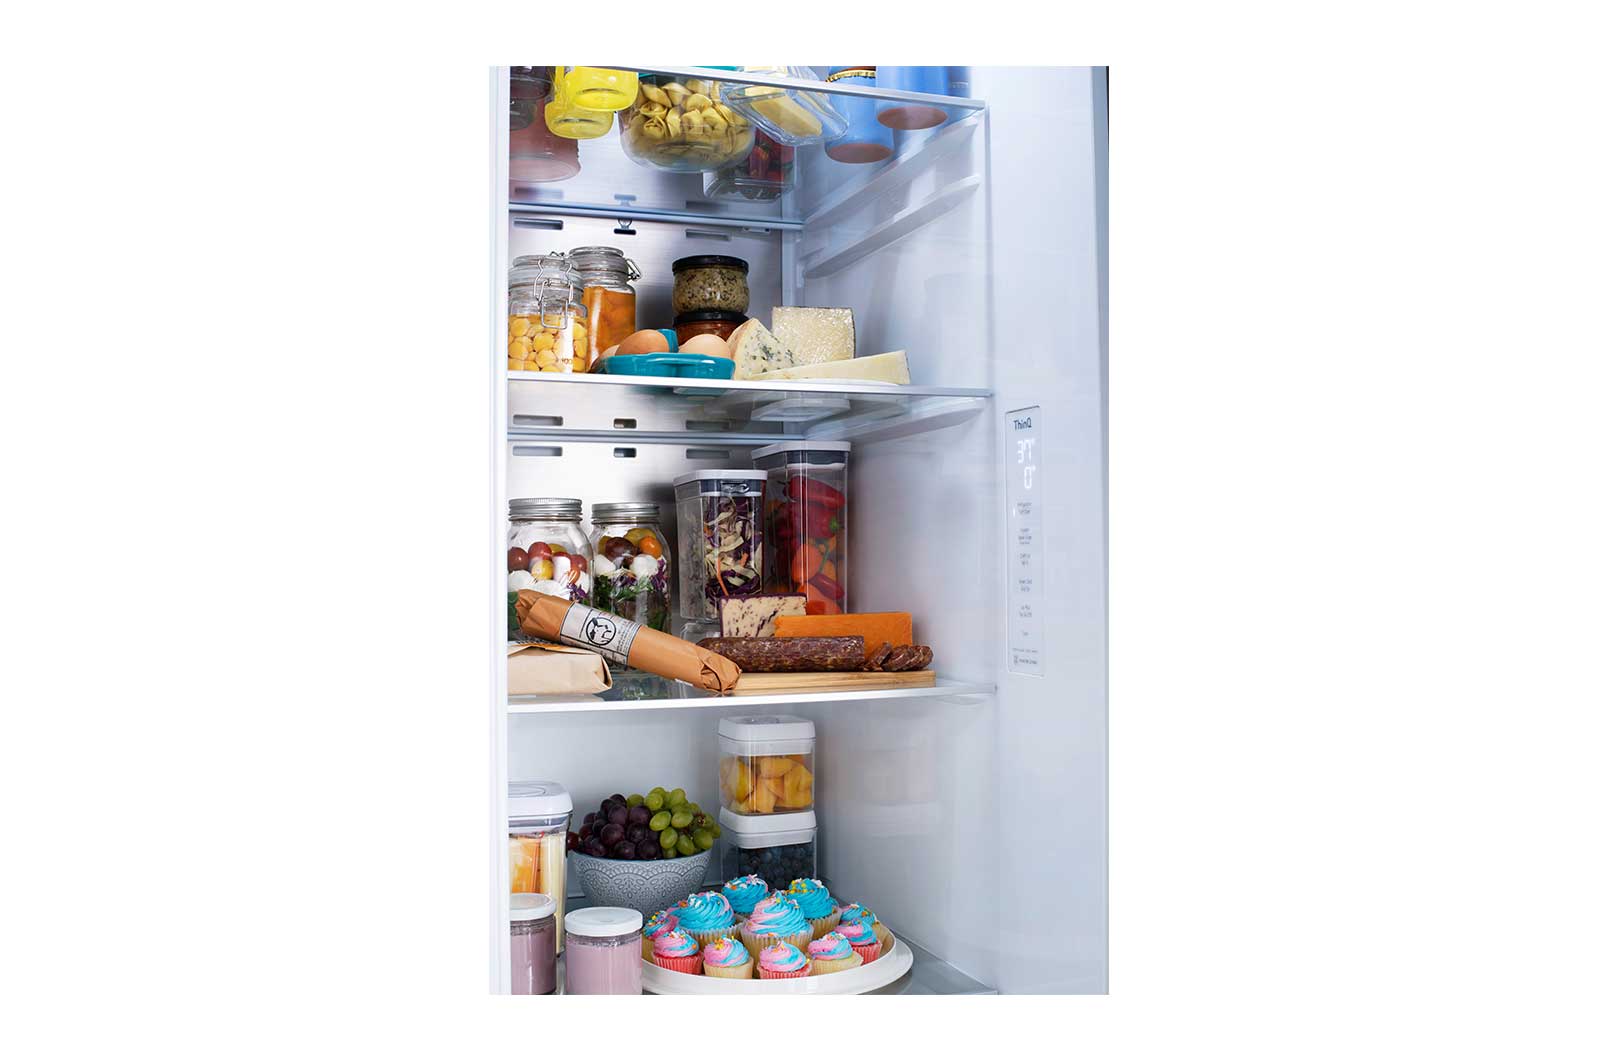 27 cu. ft. Side-By-Side InstaView™ Refrigerator